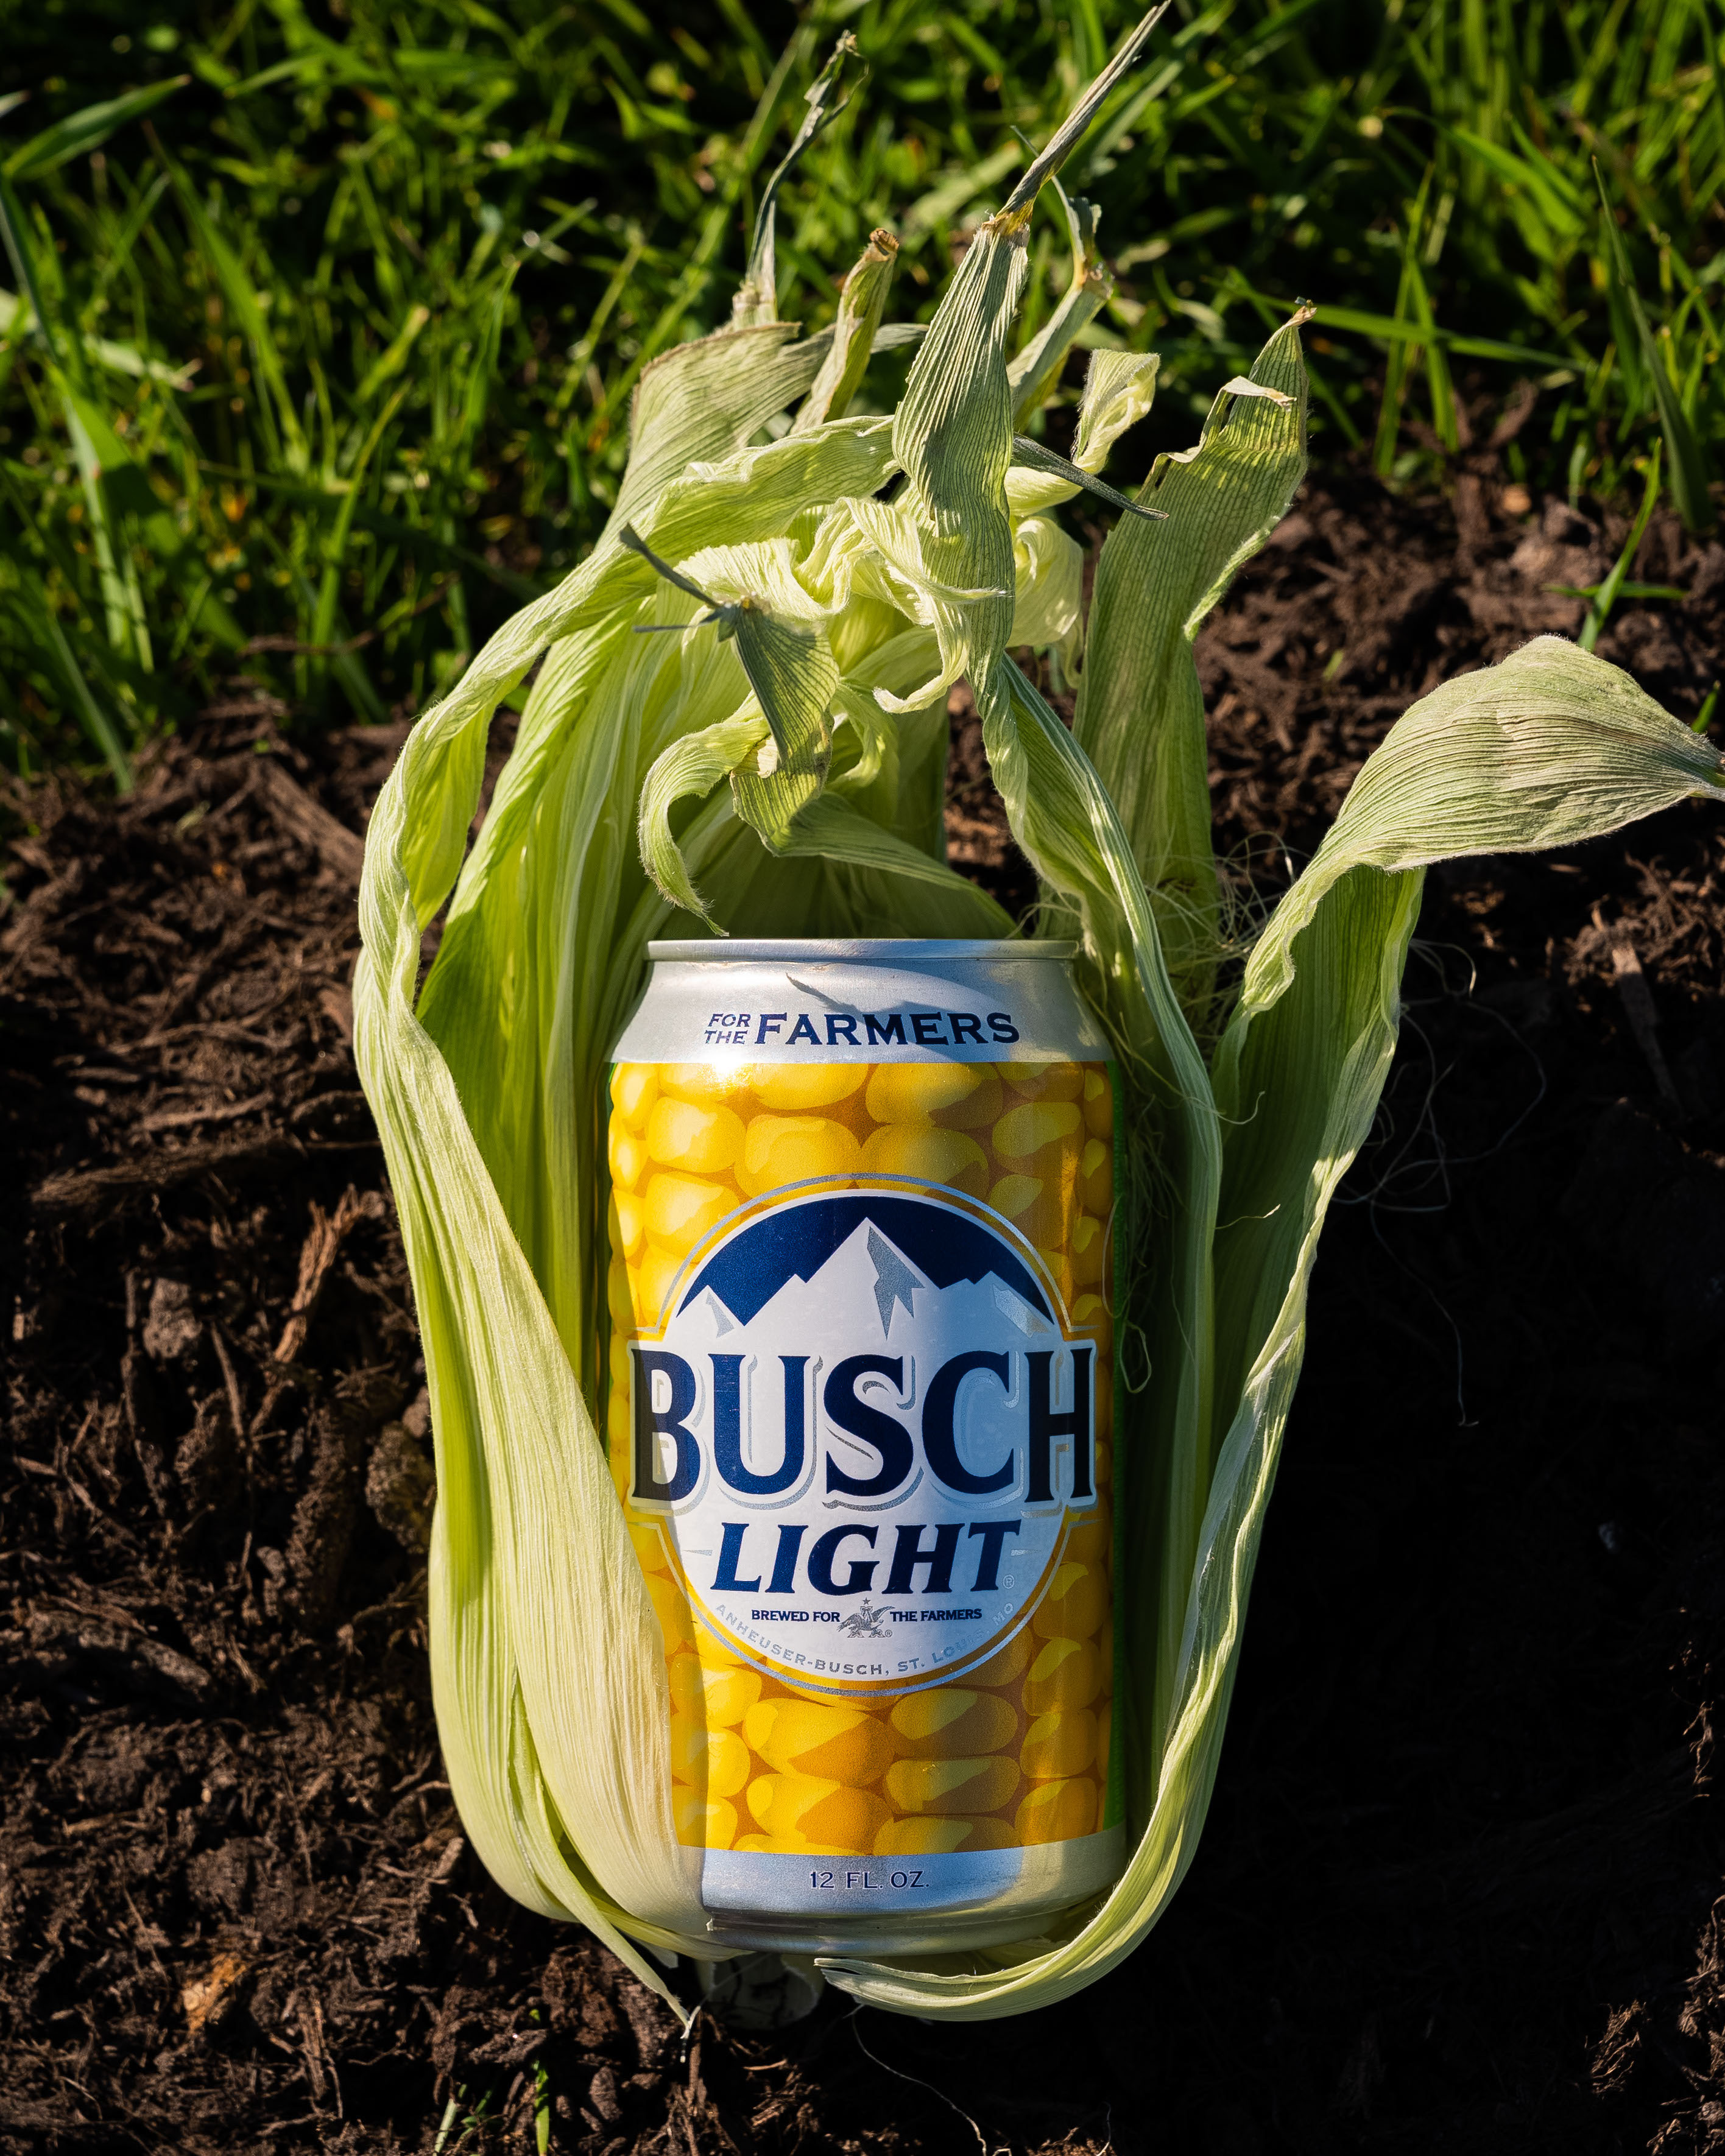 Busch Light launches Corn Cans to aid Kansas family farms